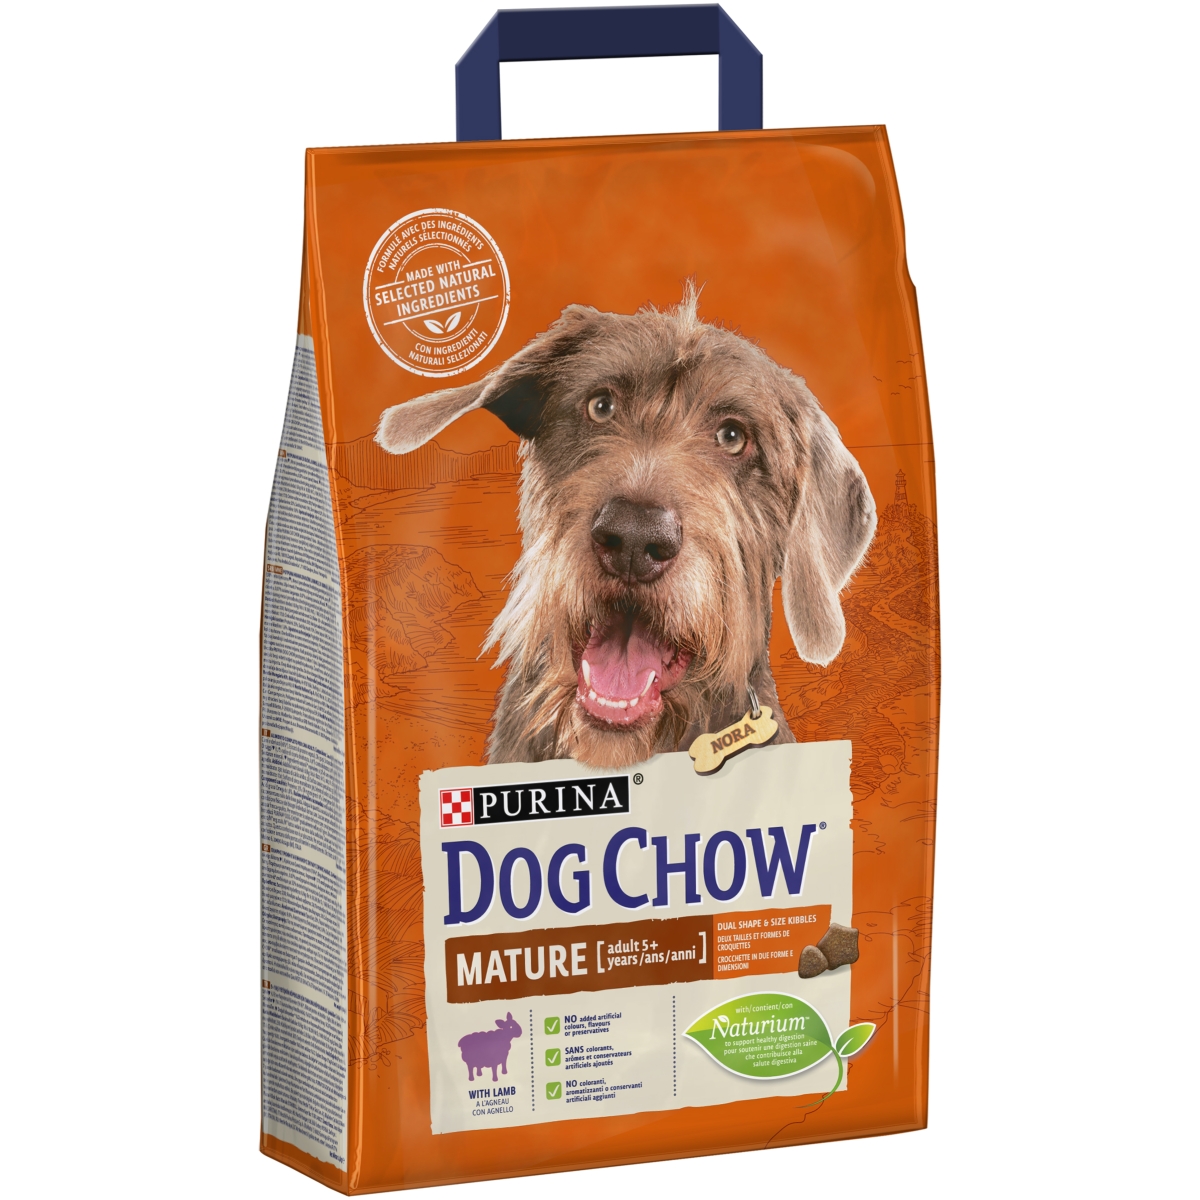 Dog Chow MATURE koeratoit 5+ a. vanusele koerale, lambaga 2,5 kg